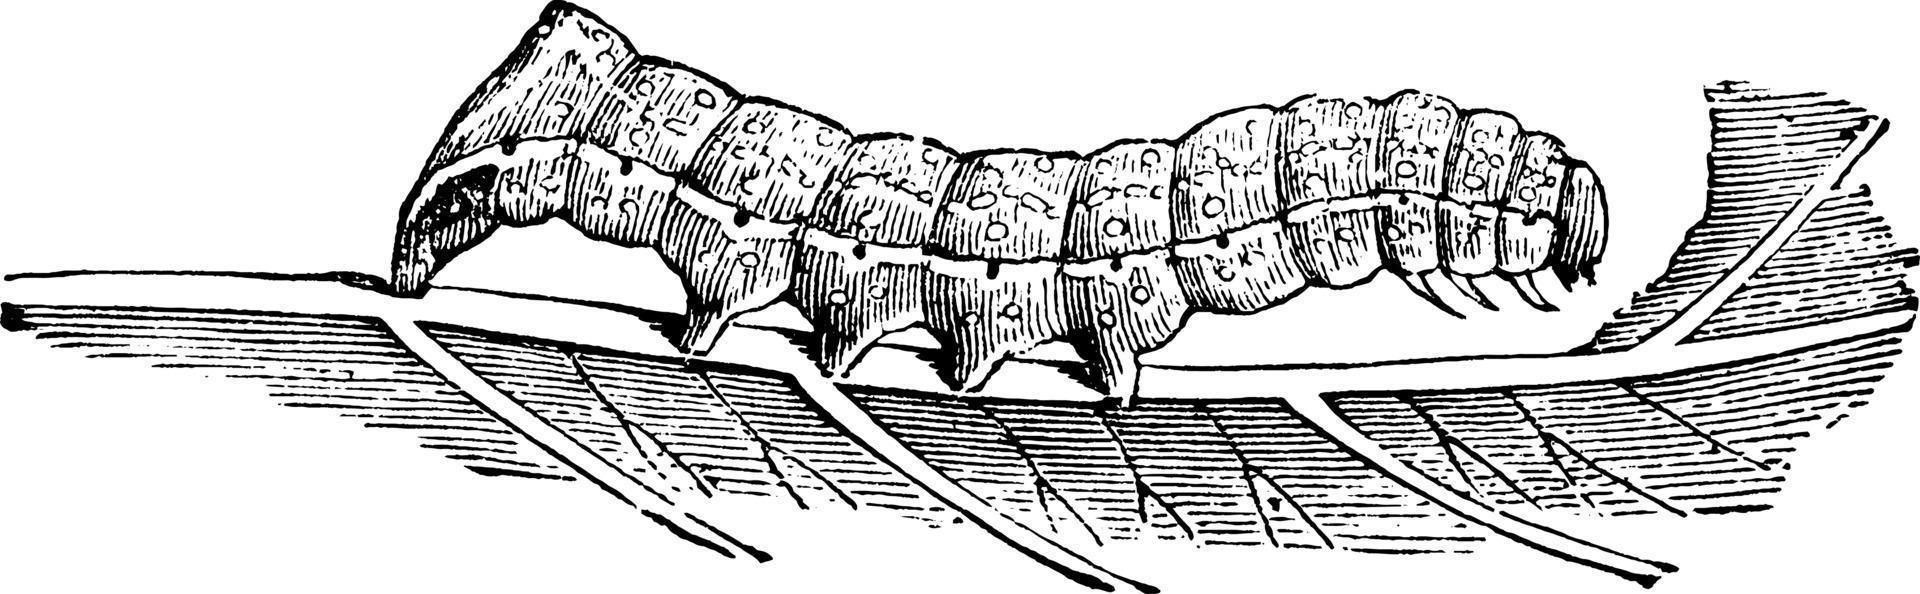 American Copper Underwing Moth or Pyrophila pyramidoides, vintage illustration. vector